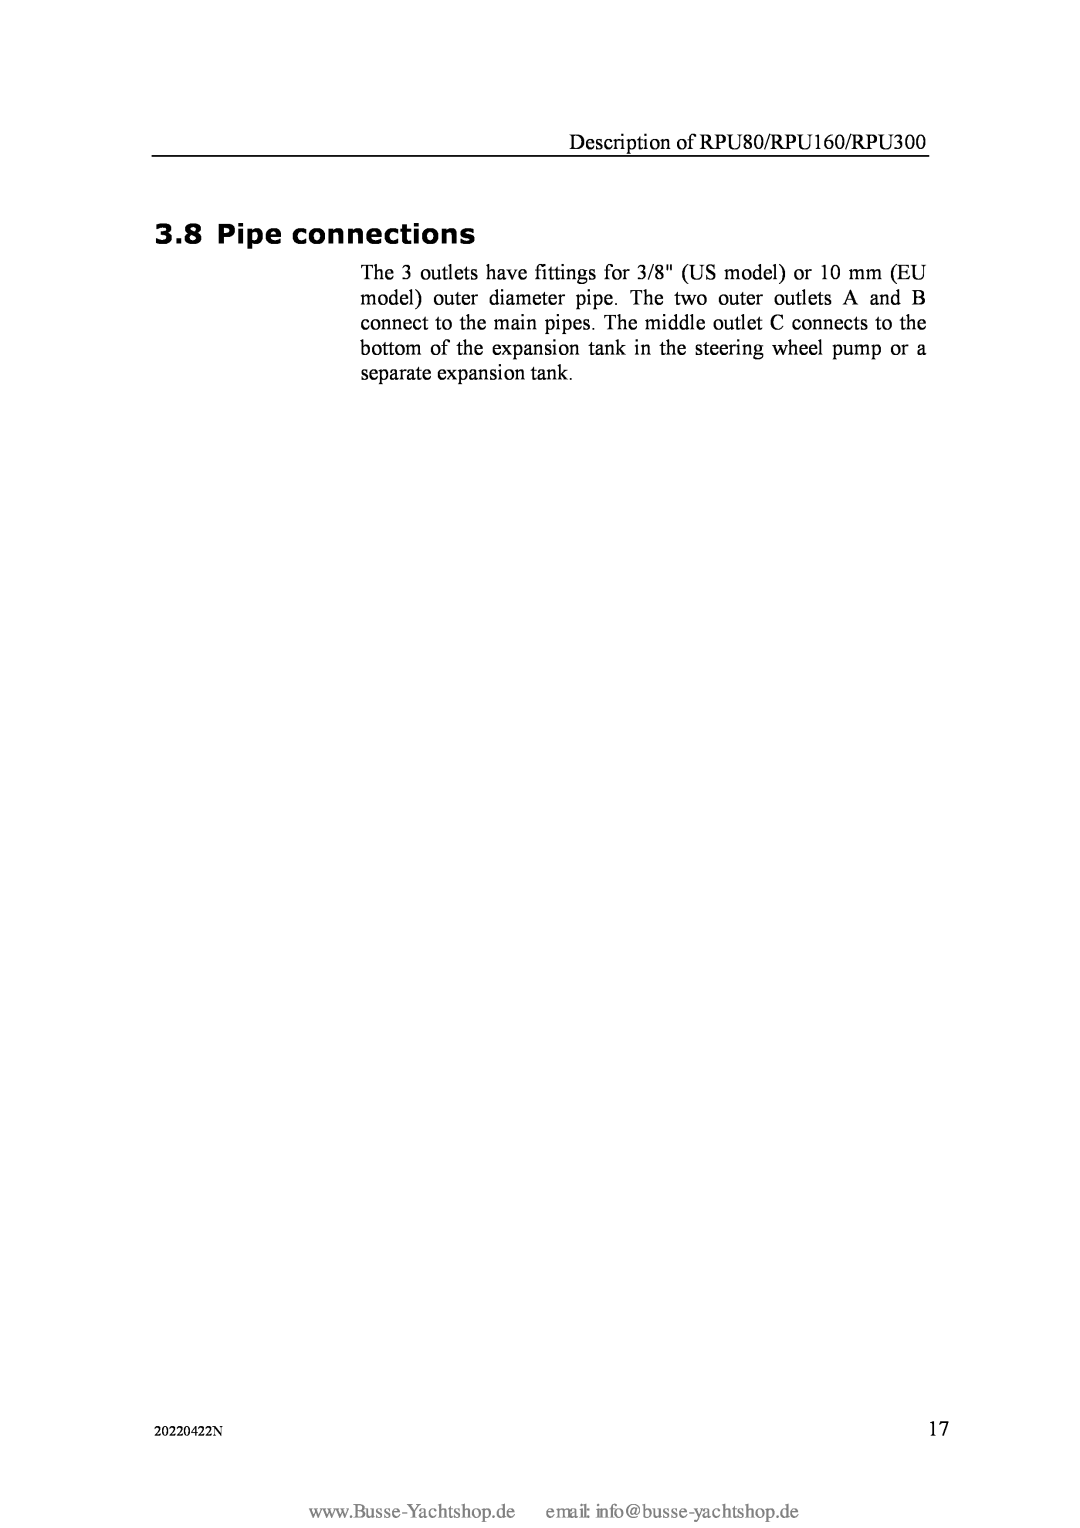 Simran instruction manual Pipe connections, Description of RPU80/RPU160/RPU300, 20220422N 